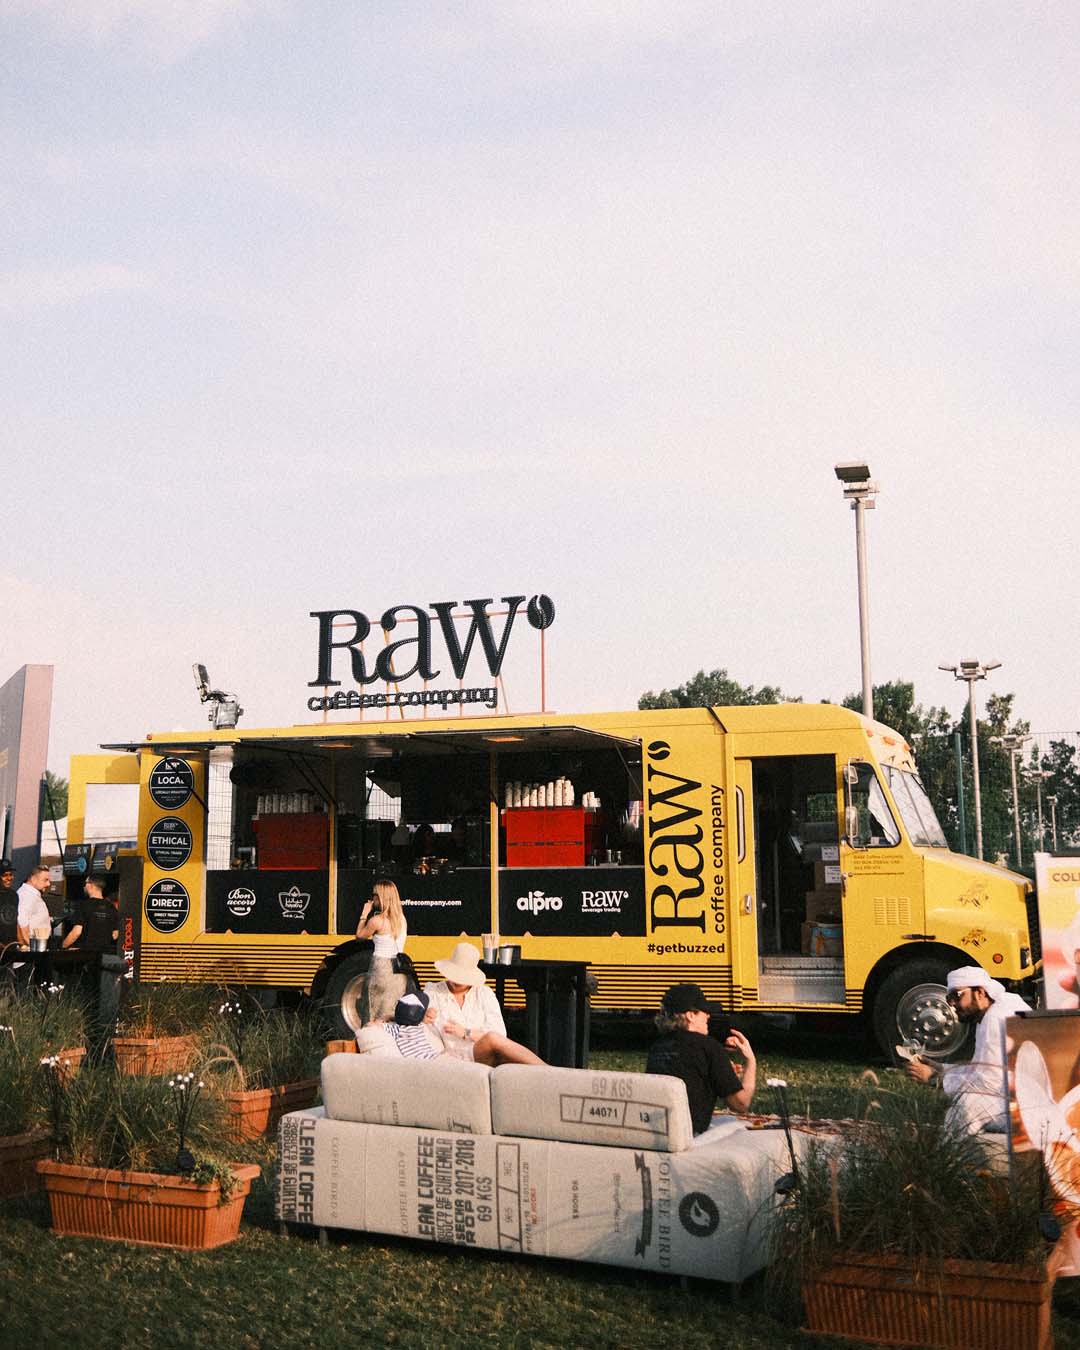 The best coffee shops in Dubai | RAW Coffee Company's yellow mobile coffee van